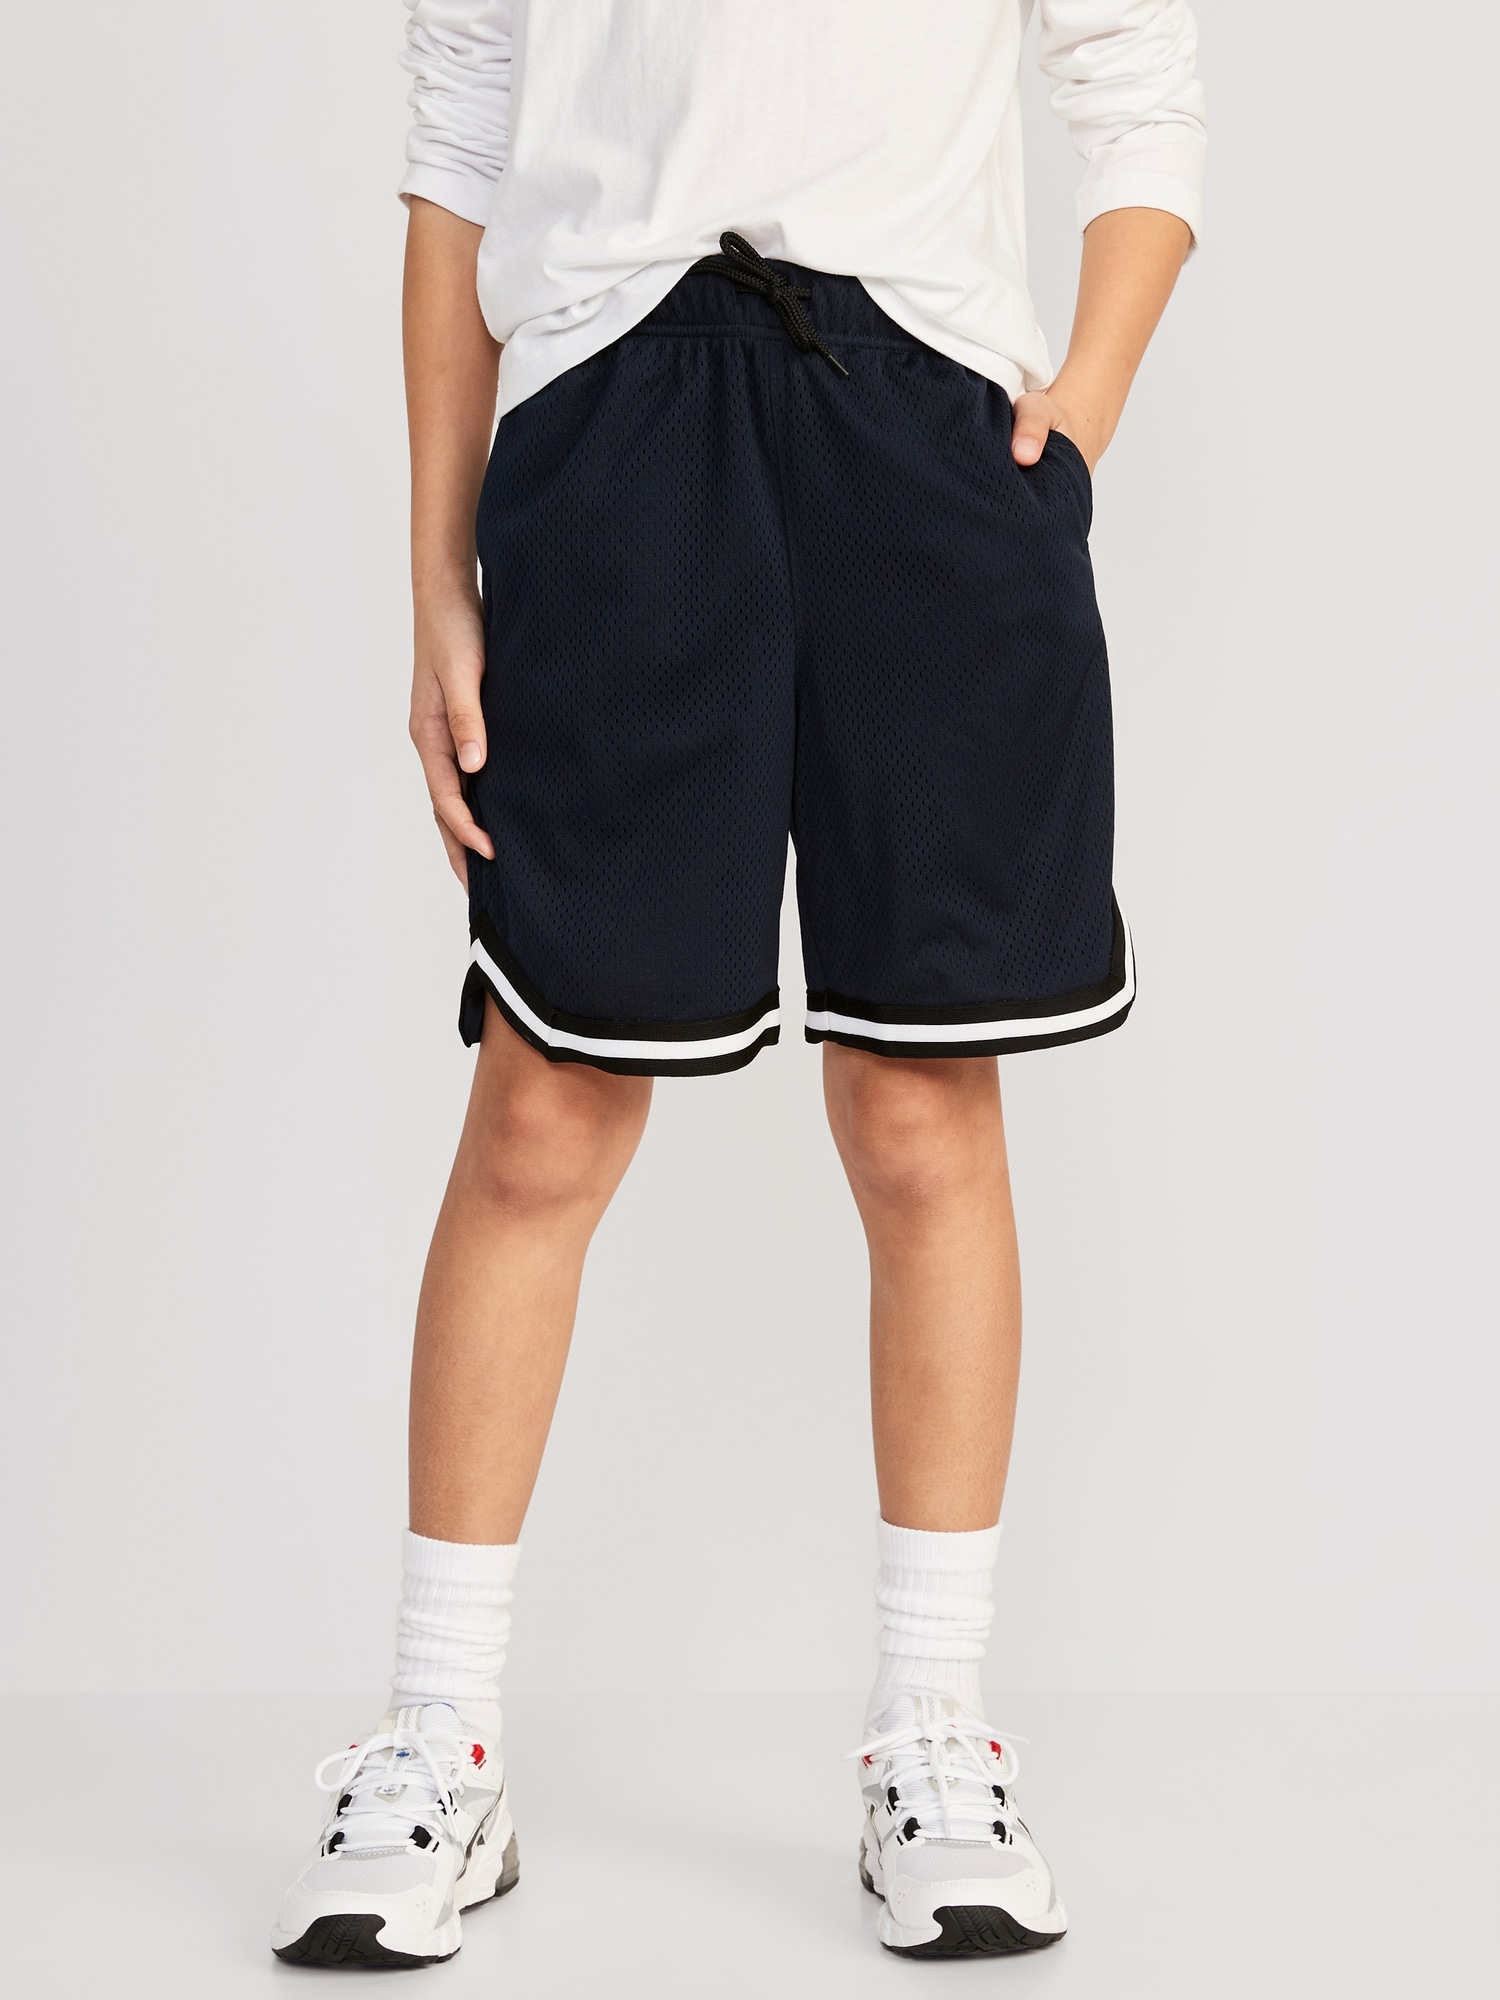 Old Navy Mesh Basketball Shorts for Boys (At Knee) blue. 1